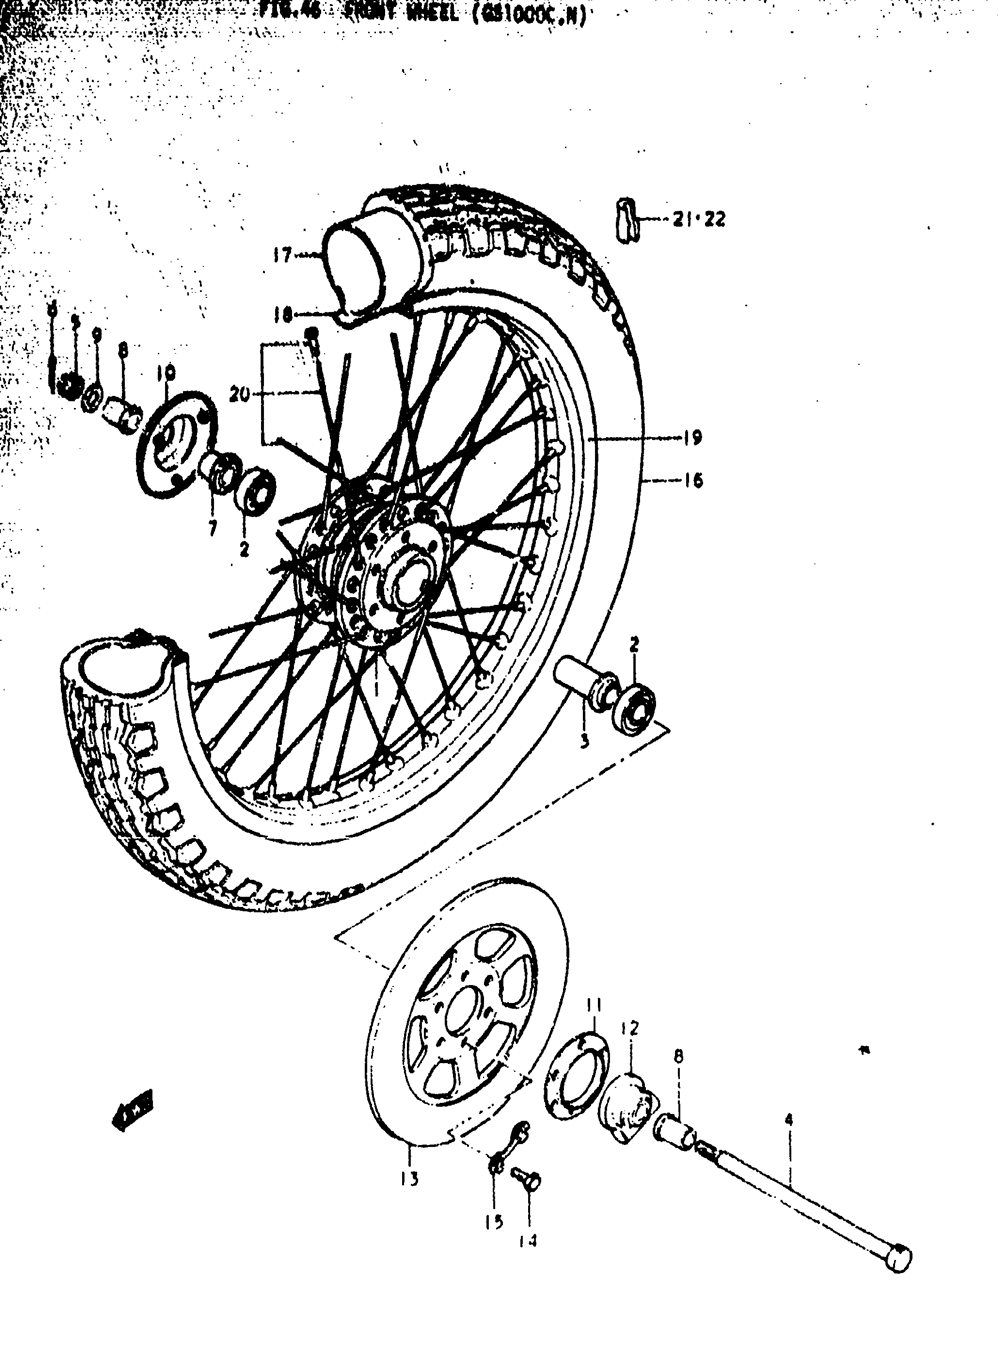 Front wheel (gs1000c